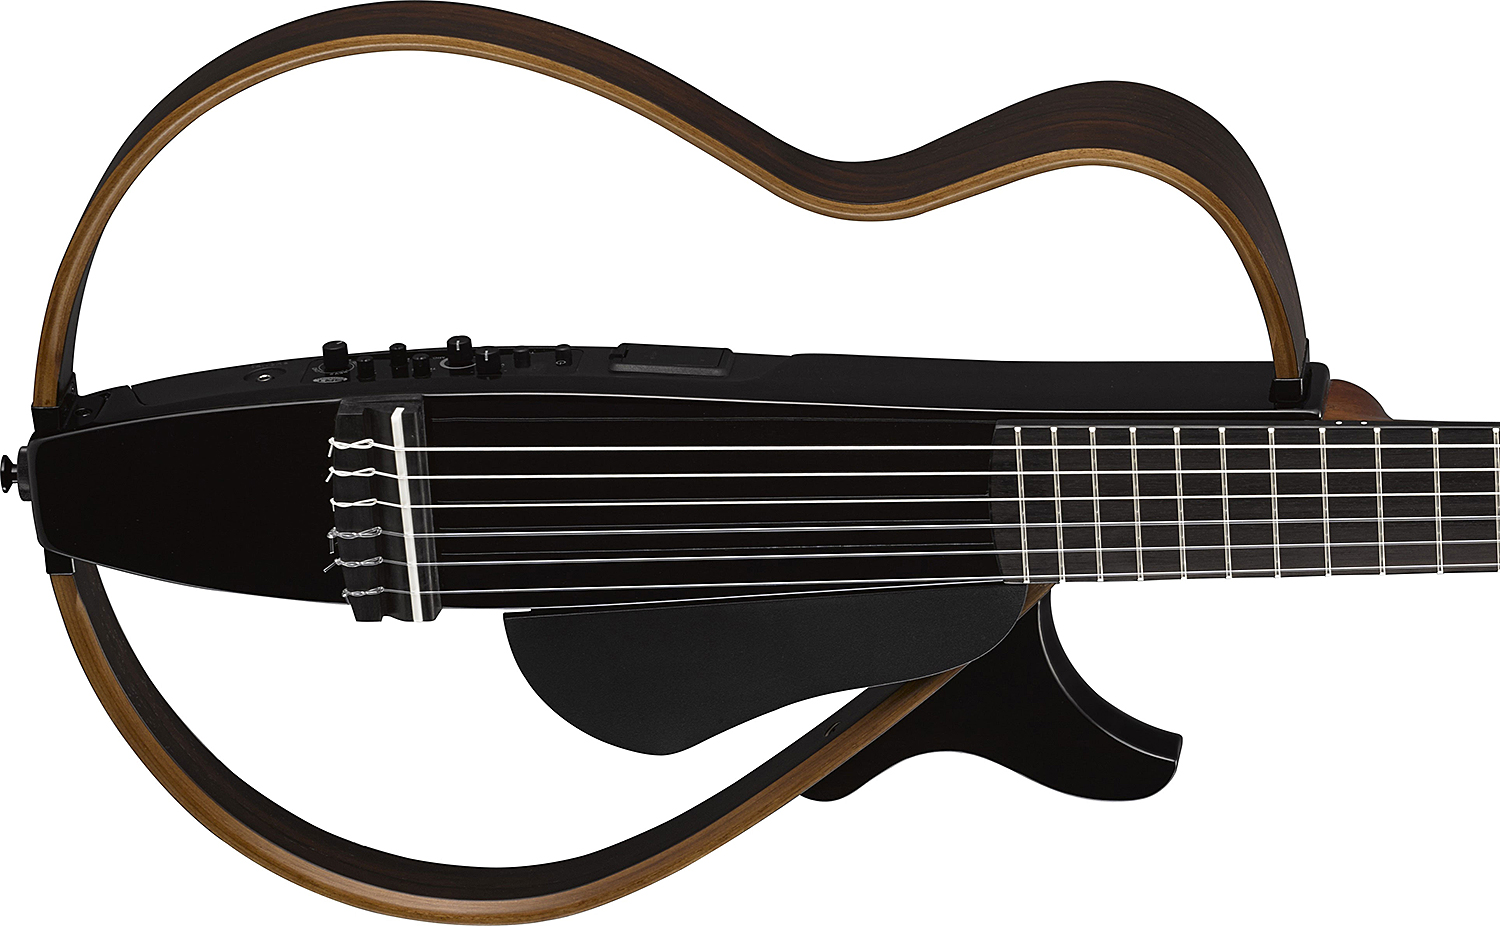 Yamaha Silent Guitar Slg200n - Translucent Black Gloss - Classical guitar 4/4 size - Variation 2